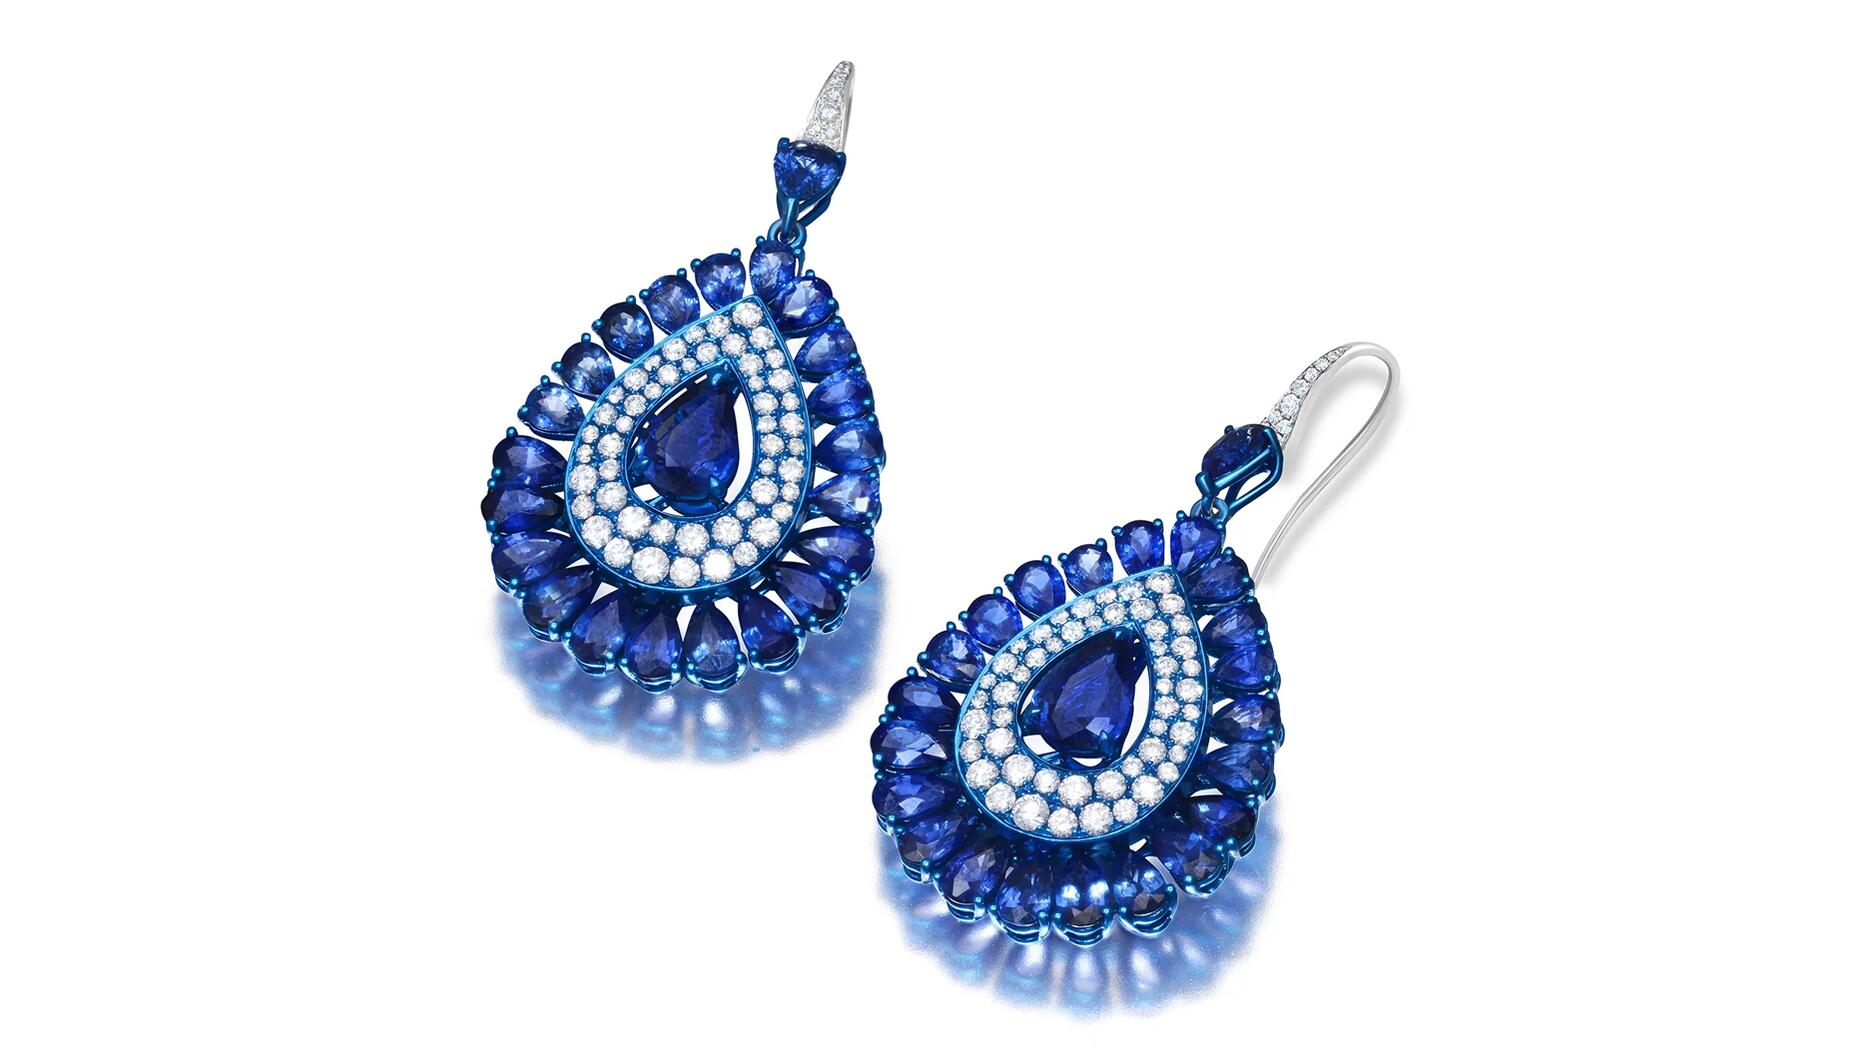 20 Sapphire Jewels to Celebrate September